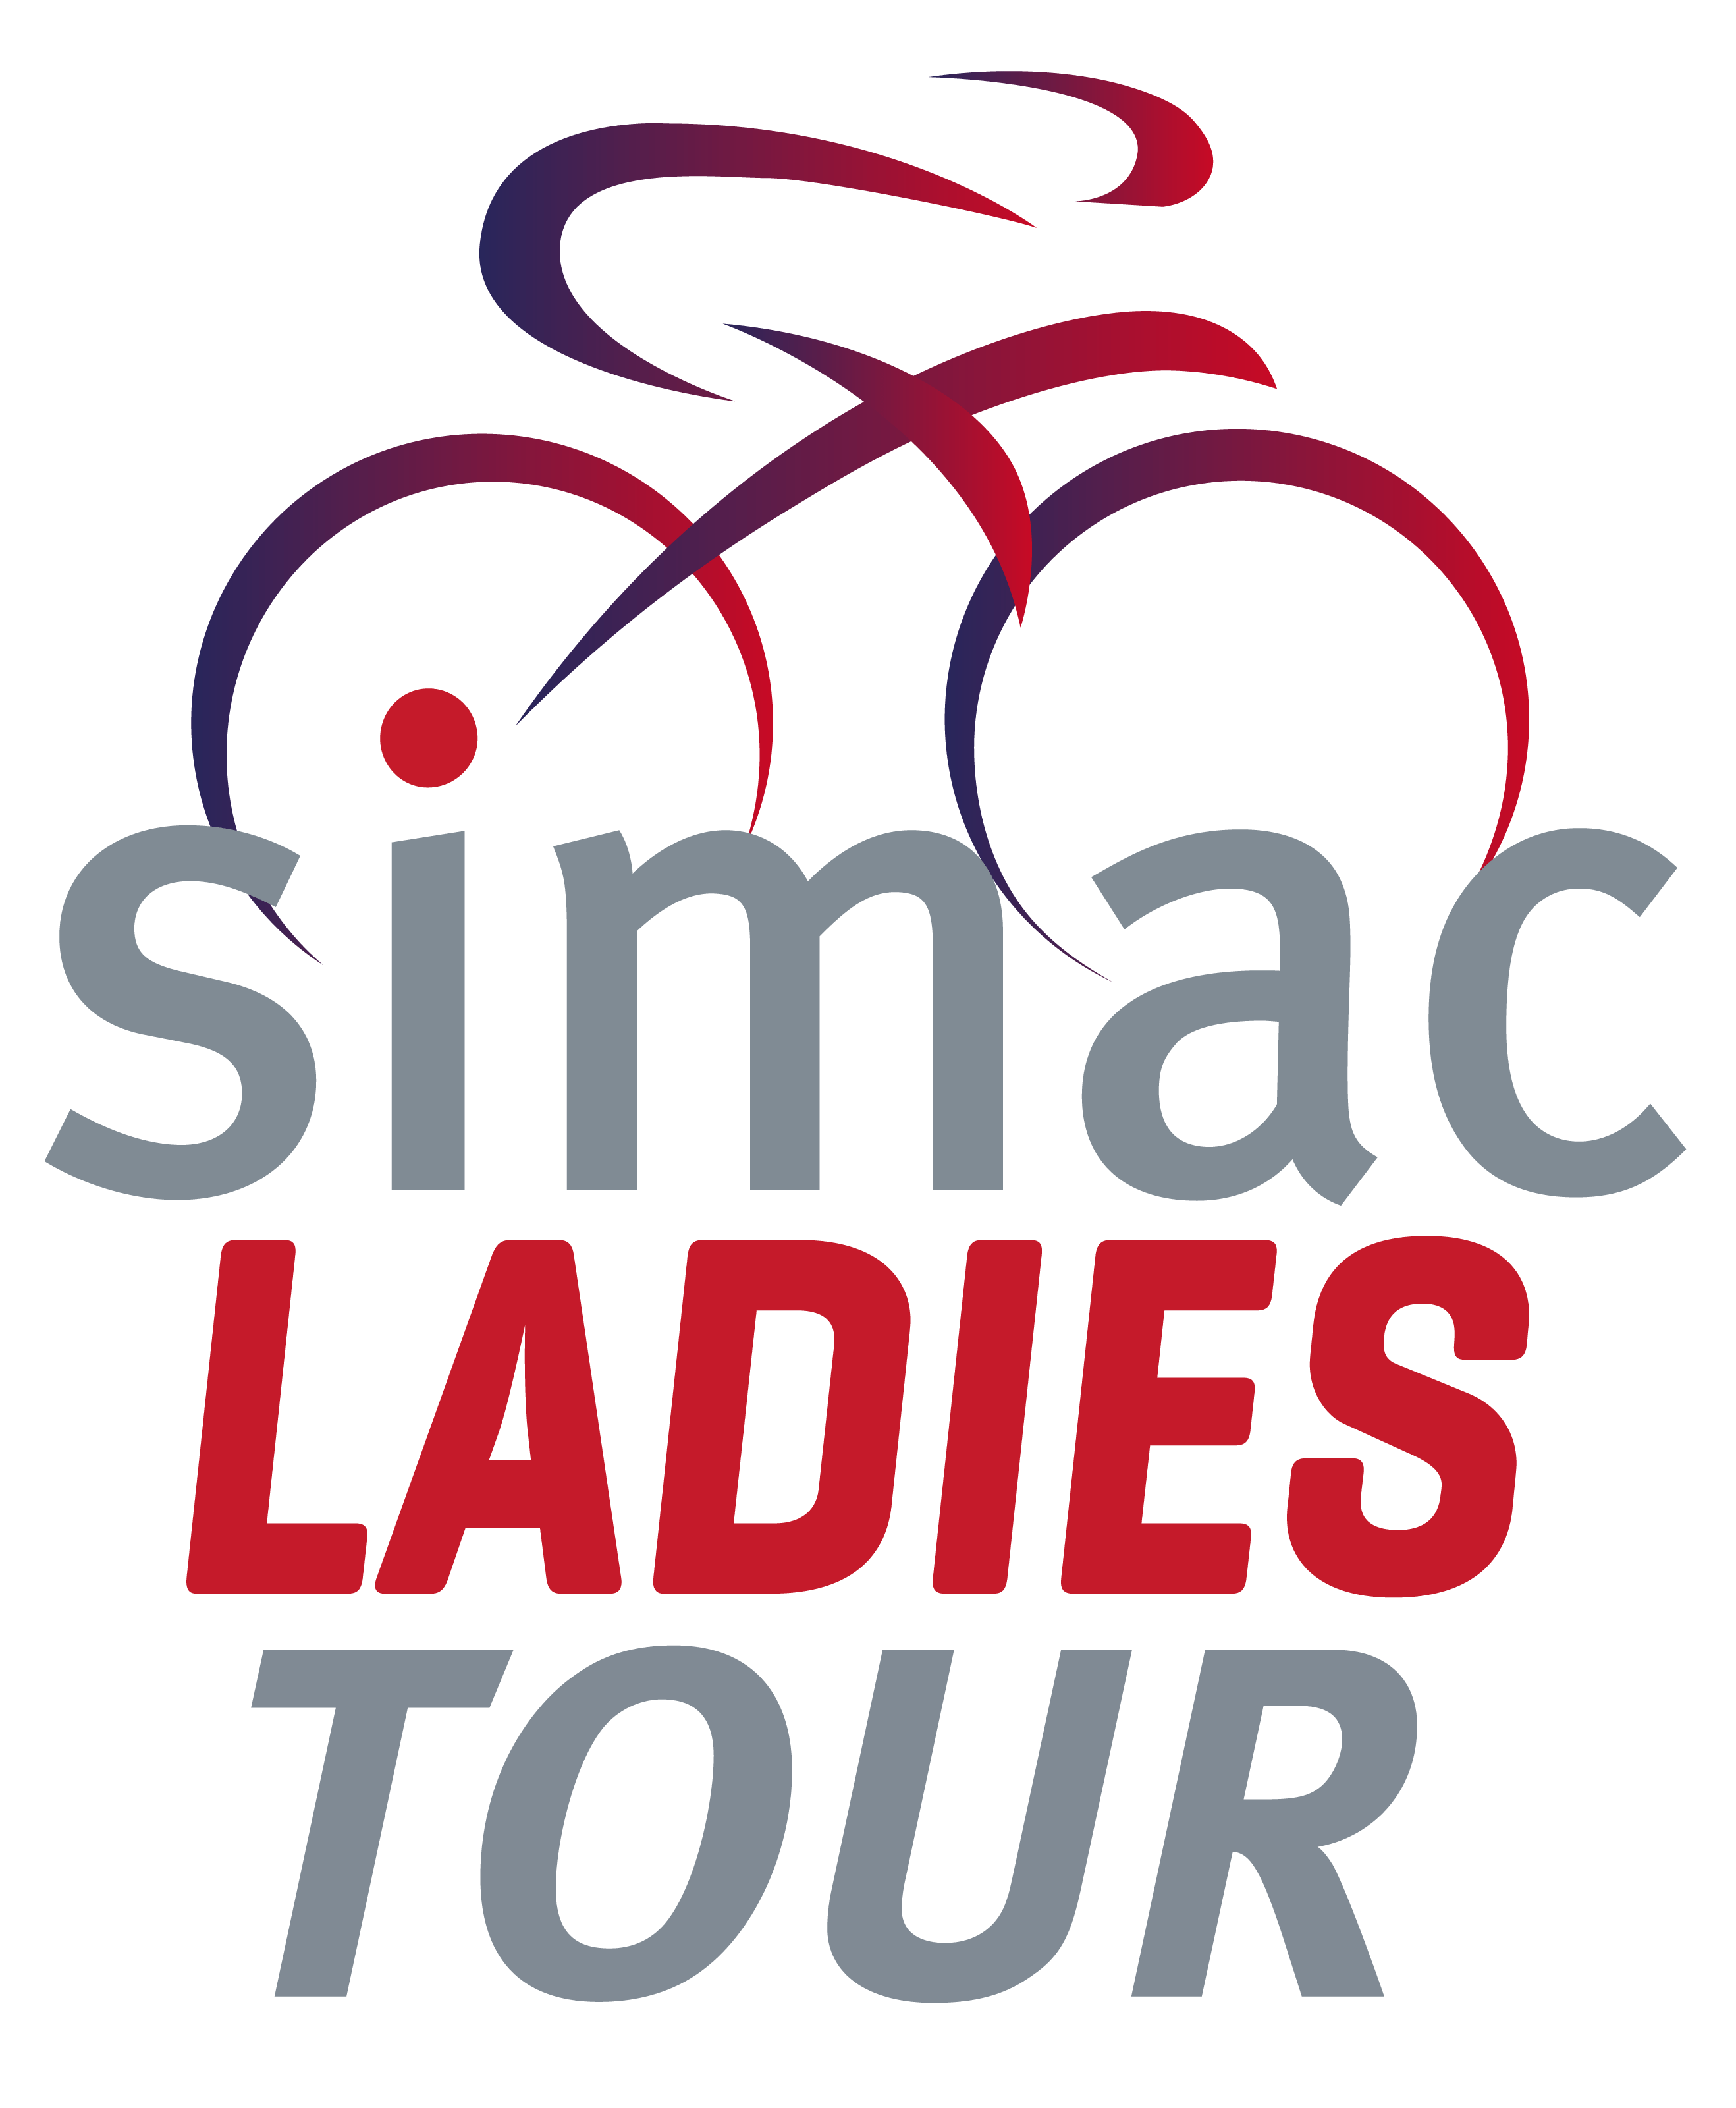 Simac Ladies Tour